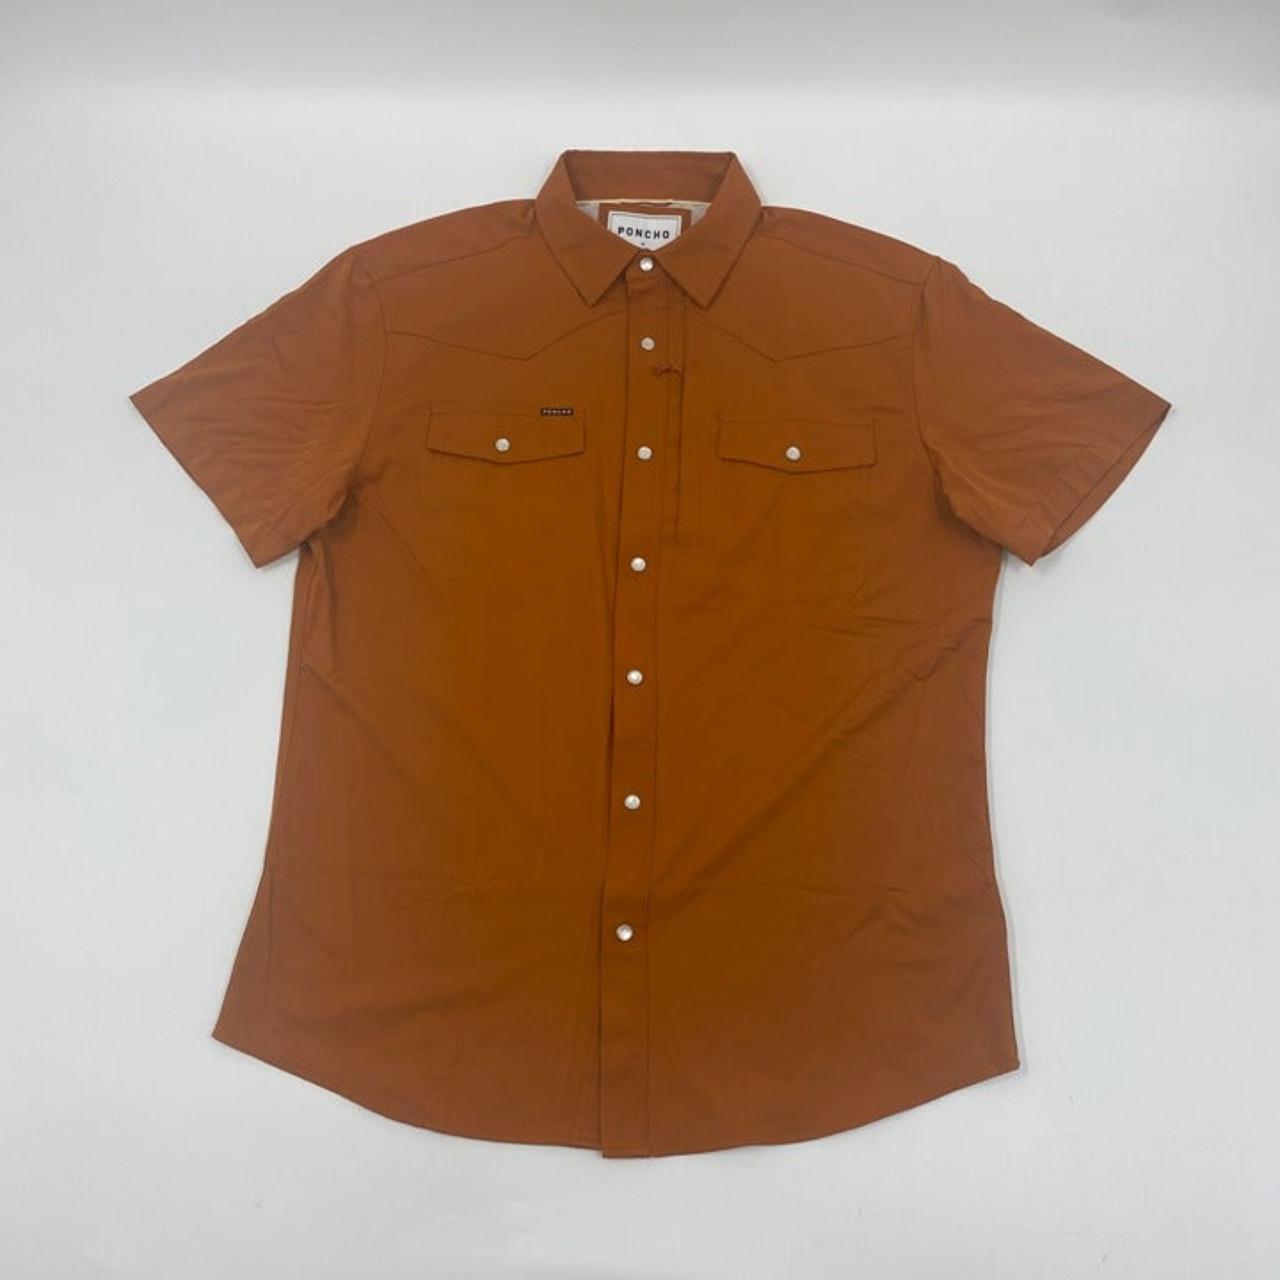 Poncho Burnt Orange Pearl Snap Shirt Size Medium - Depop